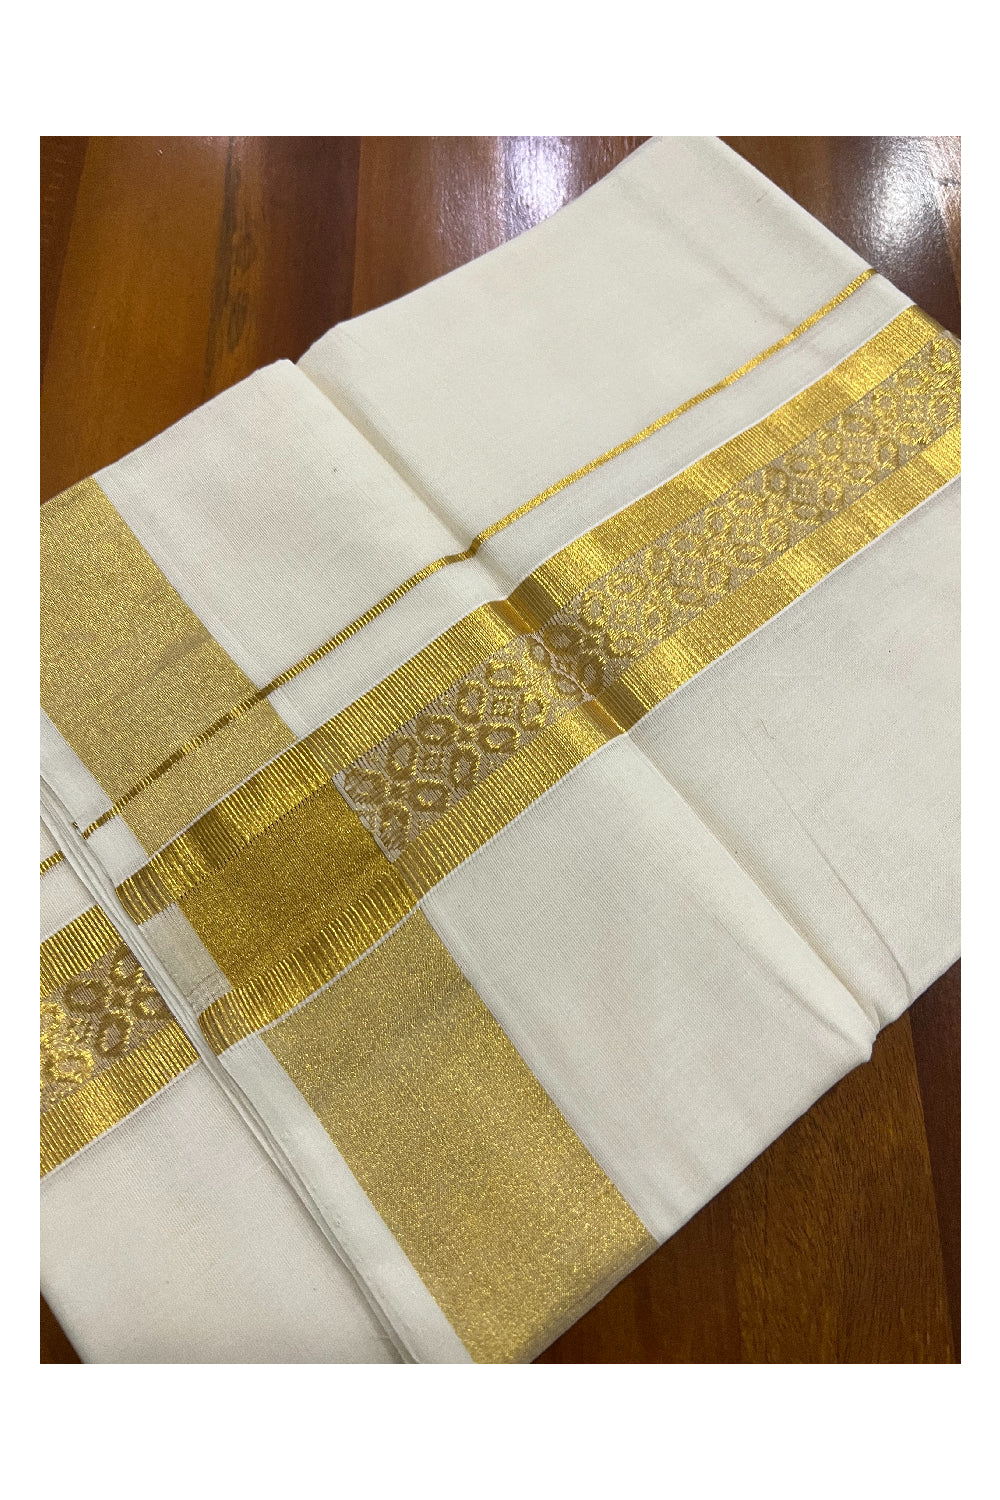 Southloom Balaramapuram Handloom Pure Cotton Wedding Mundu with Kasavu Woven Floral Design Border (South Indian Dhoti)